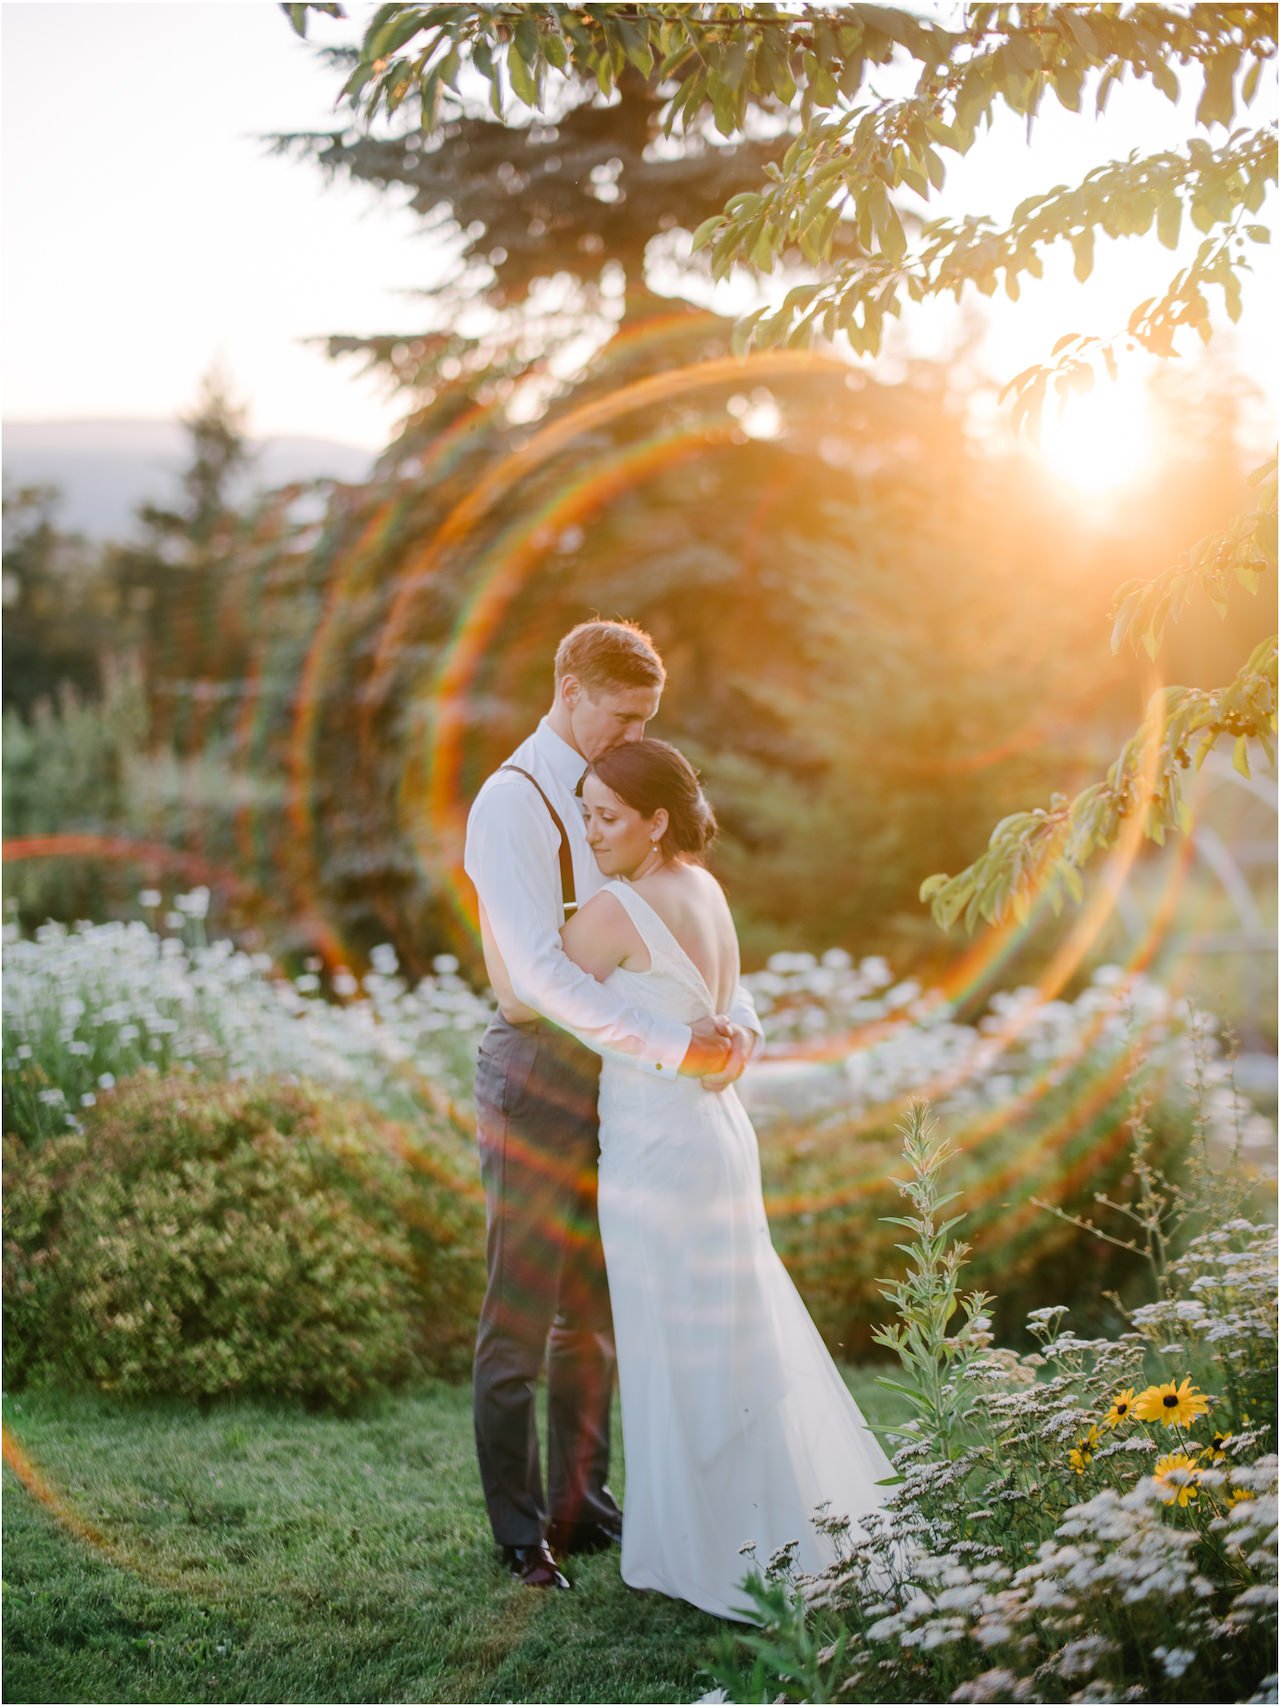  Bride and groom embrace in sun flare in wildflowers in orange evening sunlight 